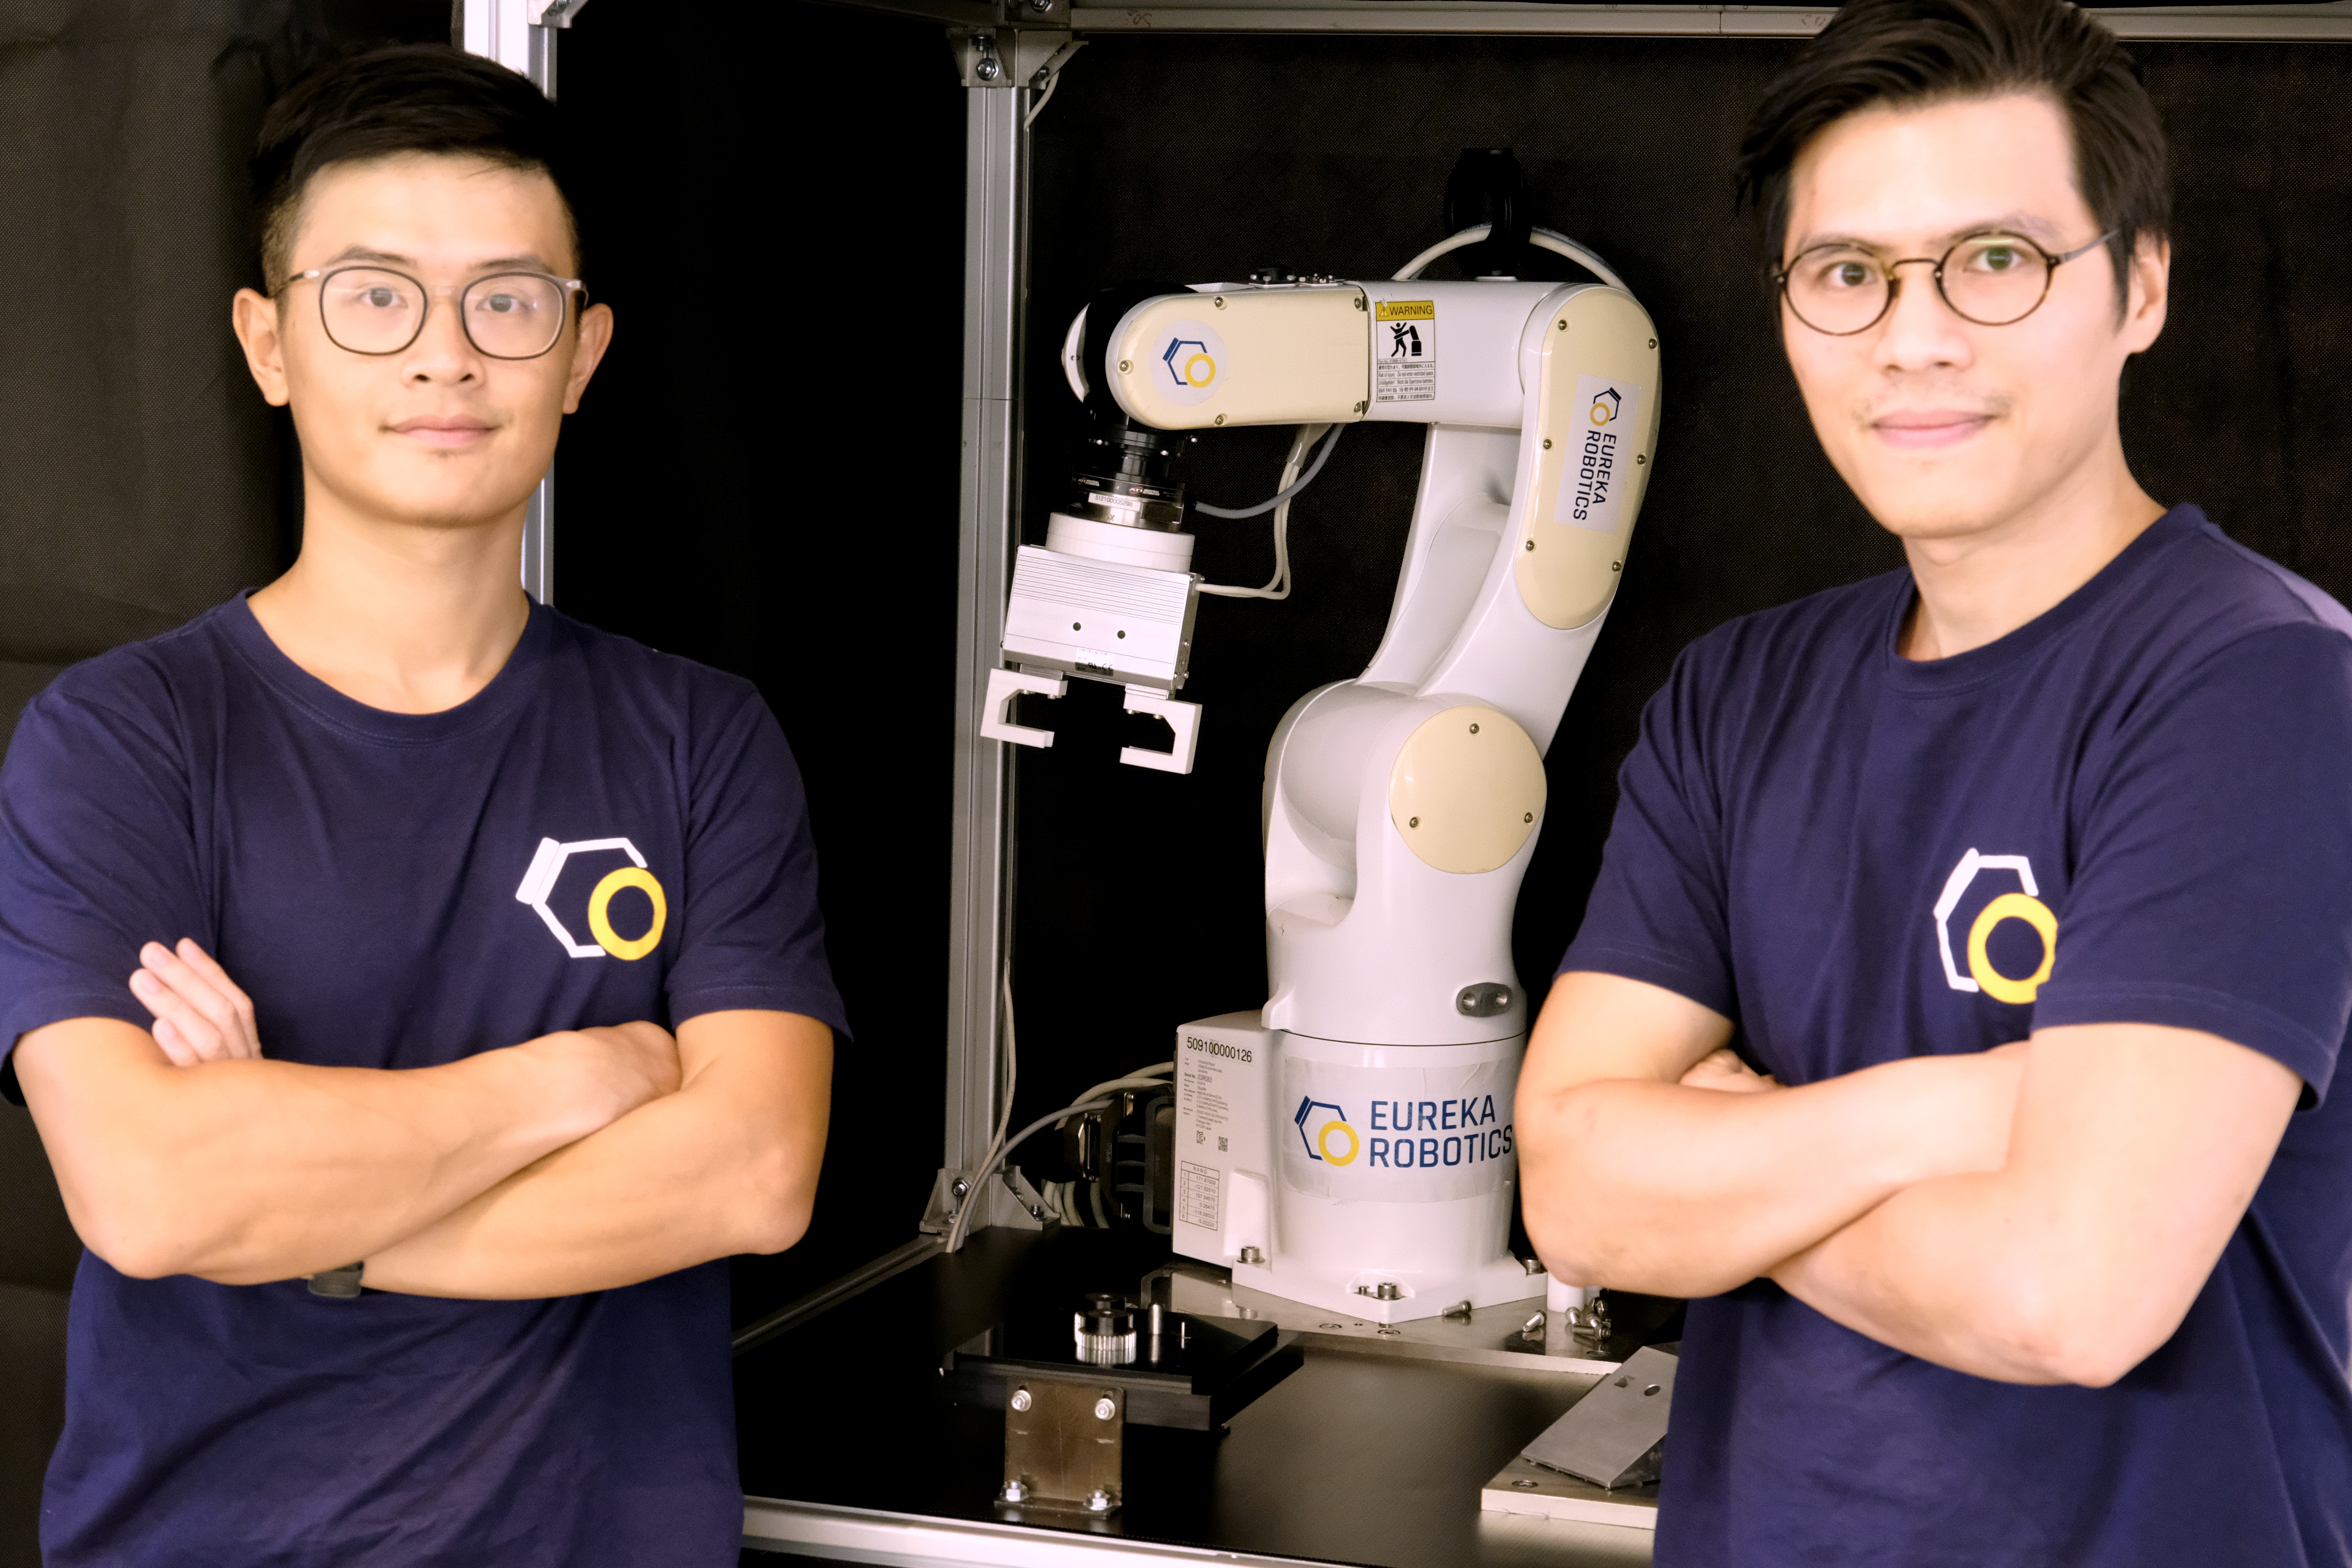 Eureka Robotics, the team behind the 'IkeaBot', picks up $4.25M